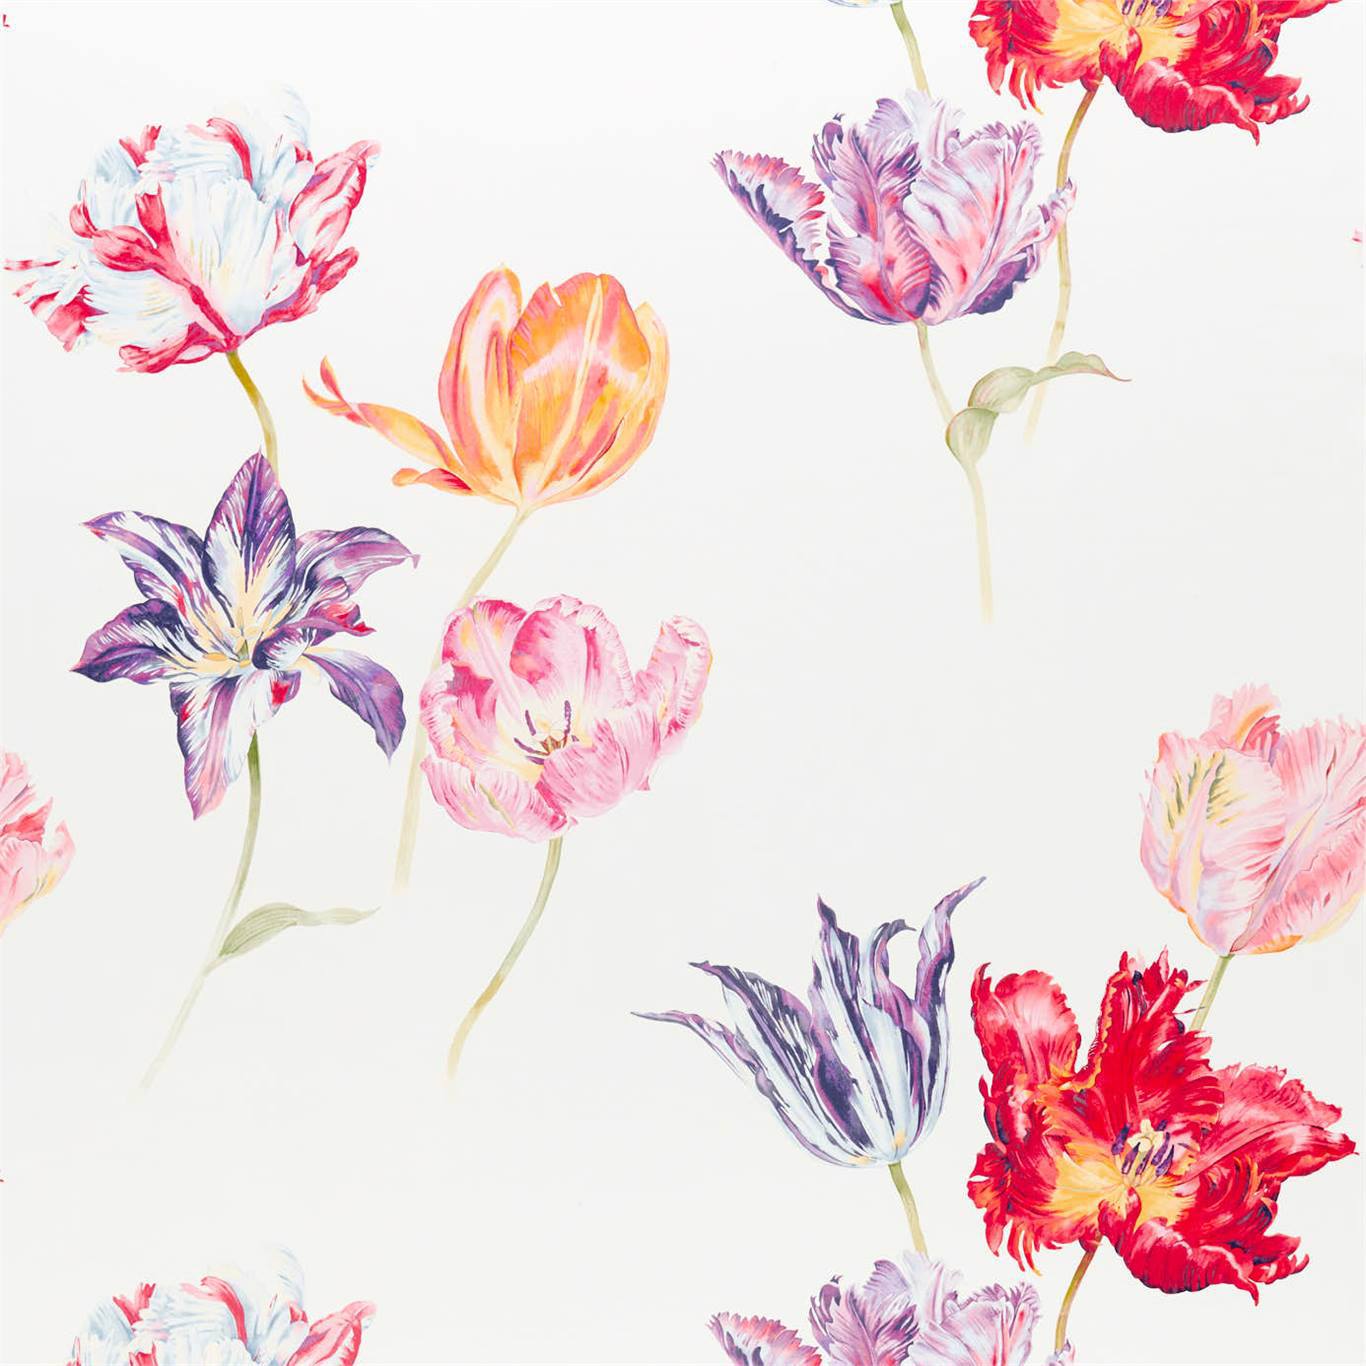 Tulipomania Fabric by Sanderson